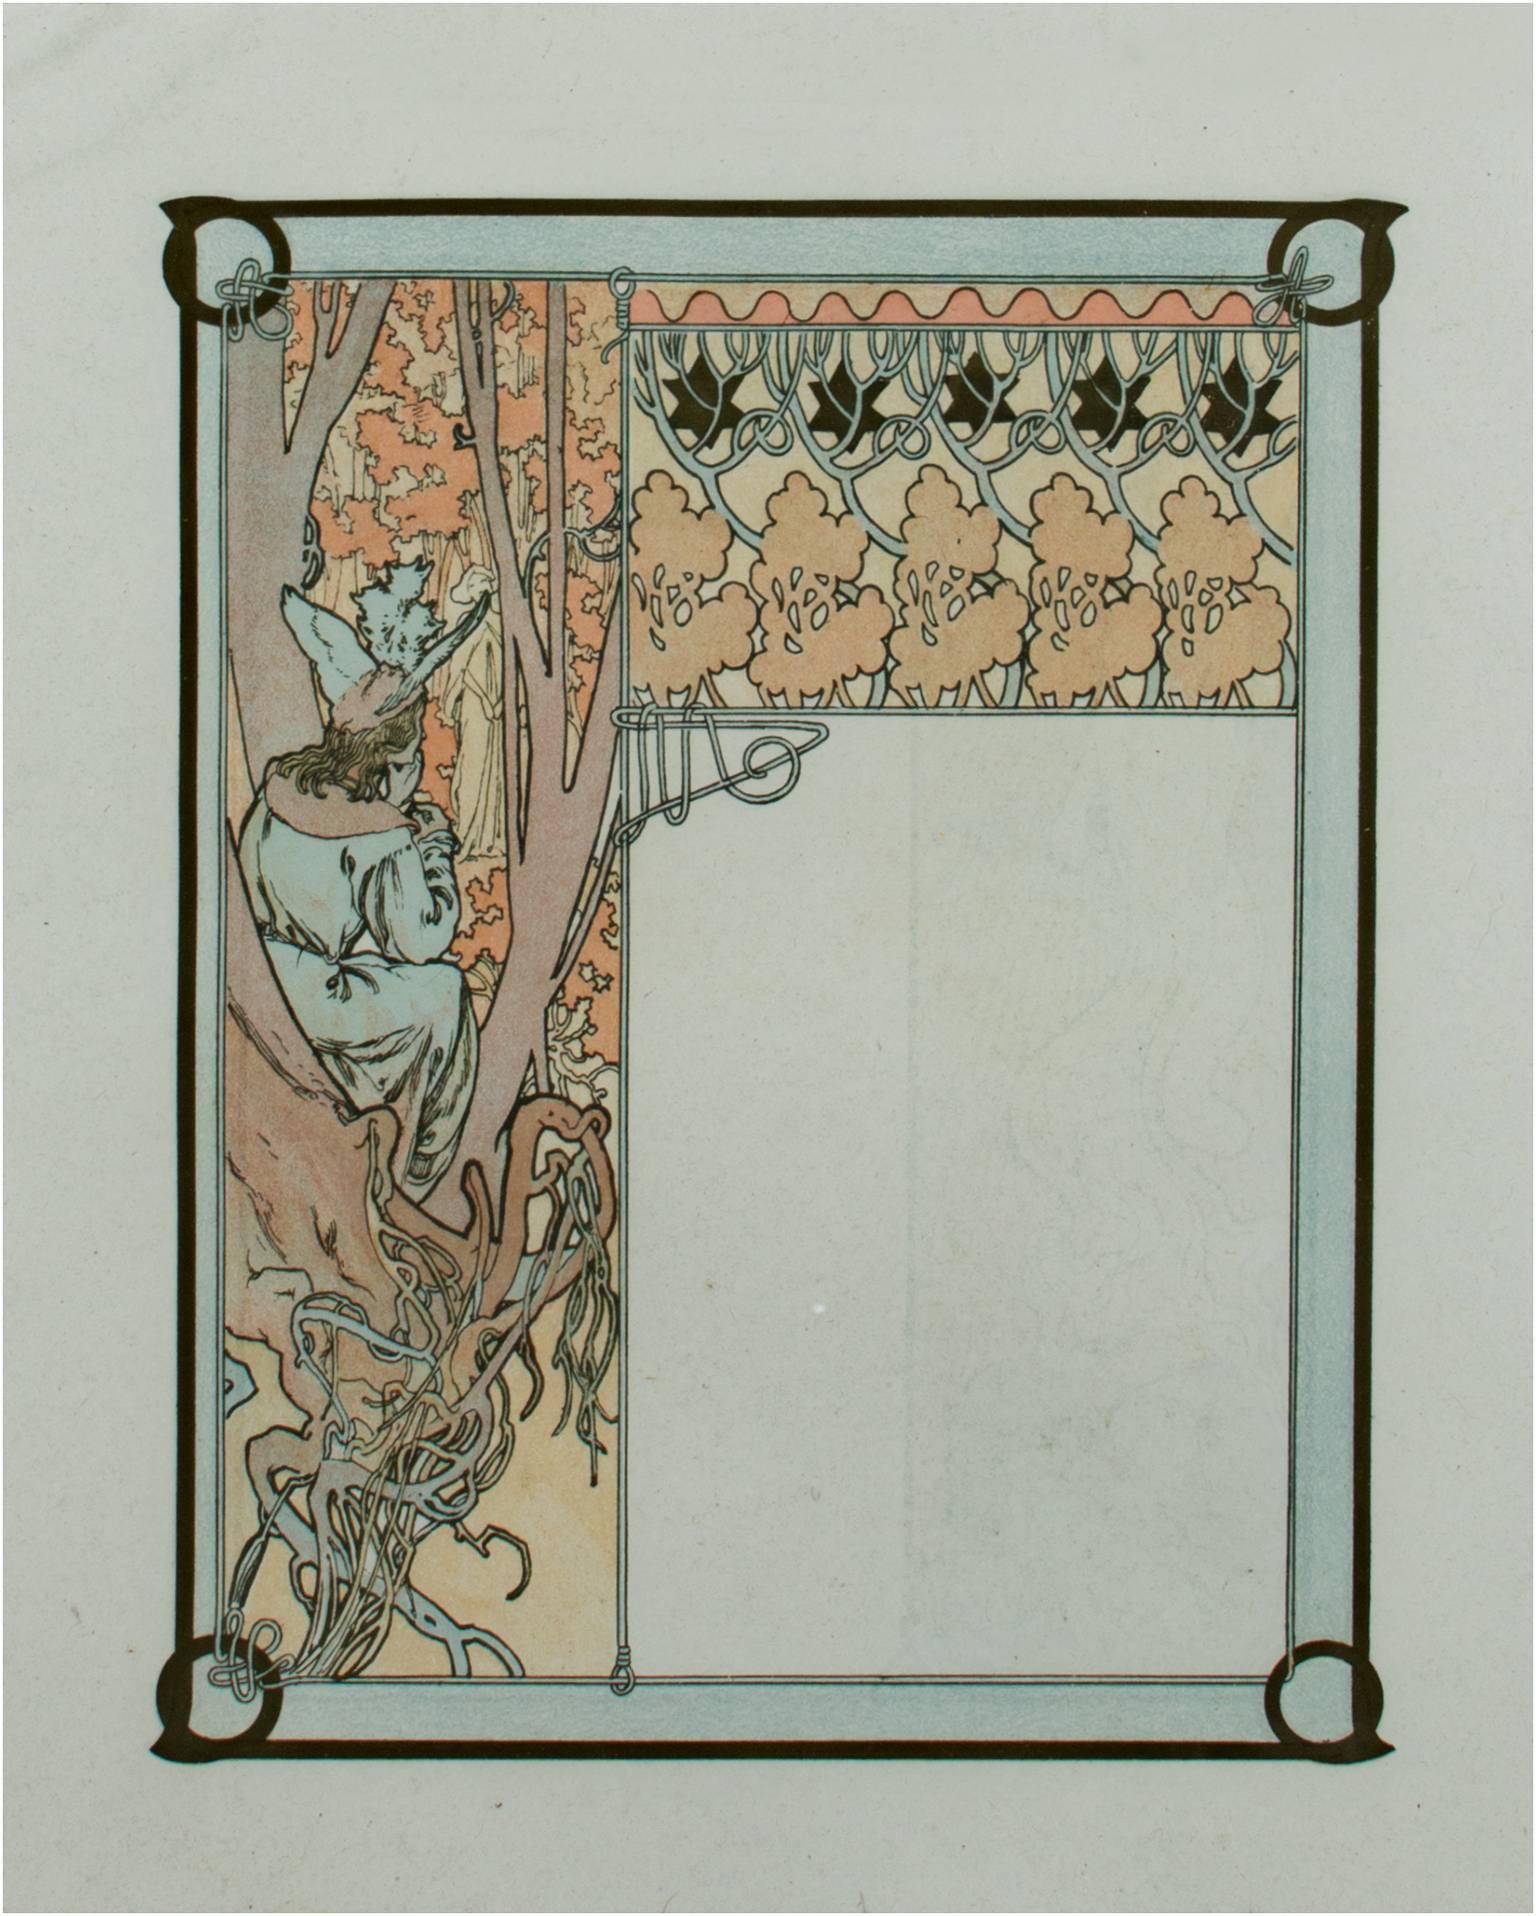 From: Ilsee, Princesse de Tripoli - Print by Alphonse Mucha